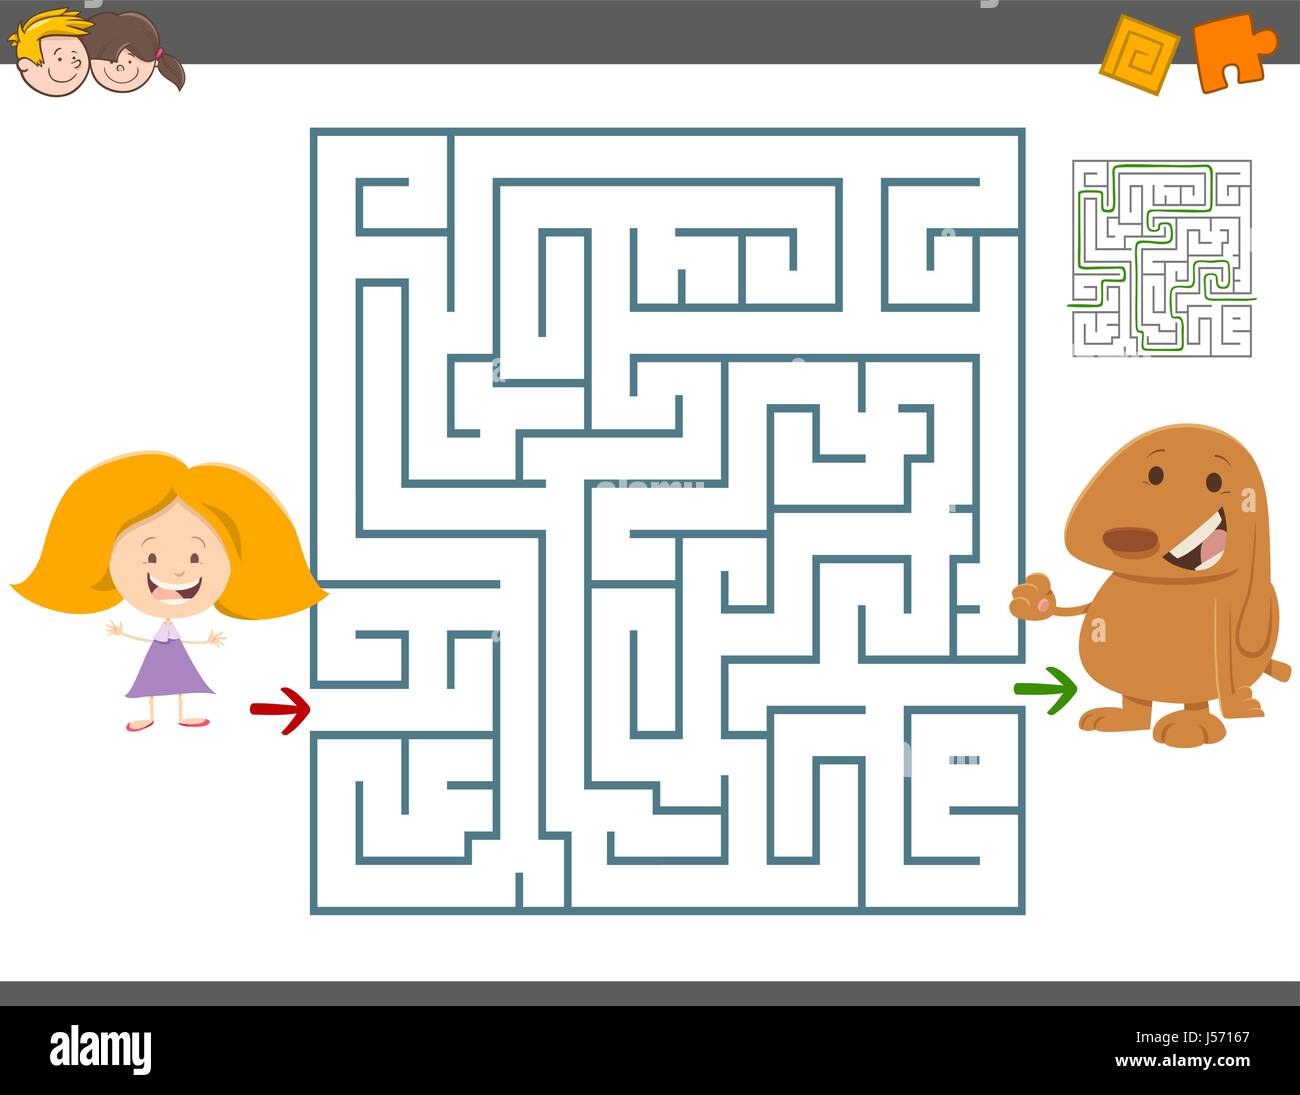 https://c8.alamy.com/comp/J57167/cartoon-illustration-of-education-maze-or-labyrinth-leisure-activity-J57167.jpg